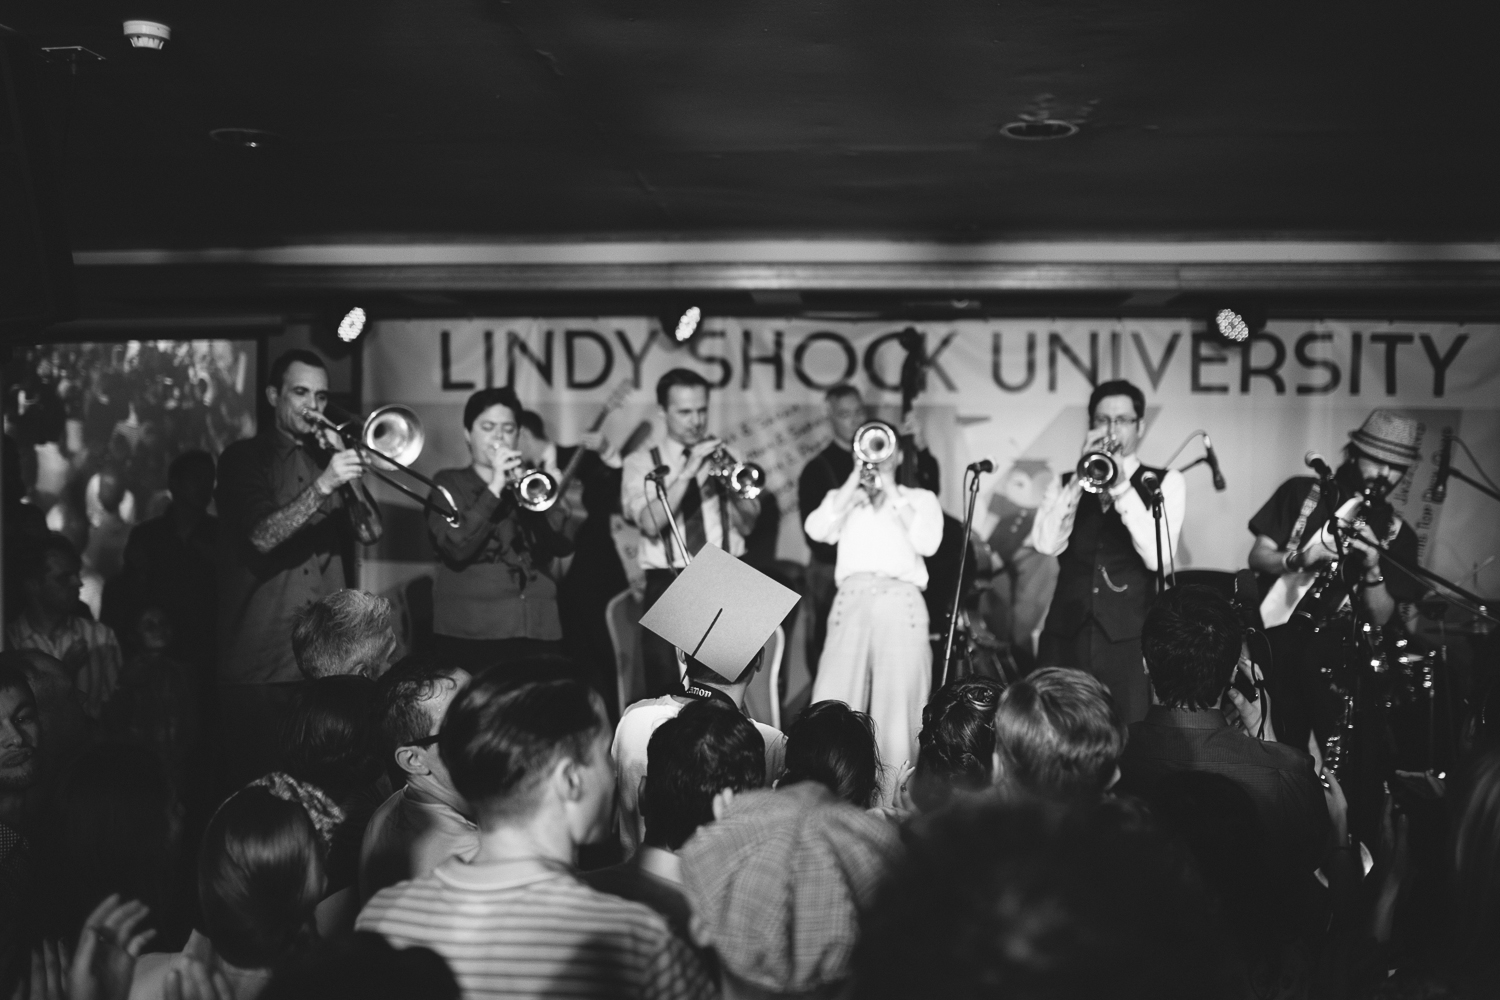  Lindy Shock 2014 - http://www.ebobrie.com/lindy-shock-2014 / https://www.facebook.com/photosForDancersOnly 